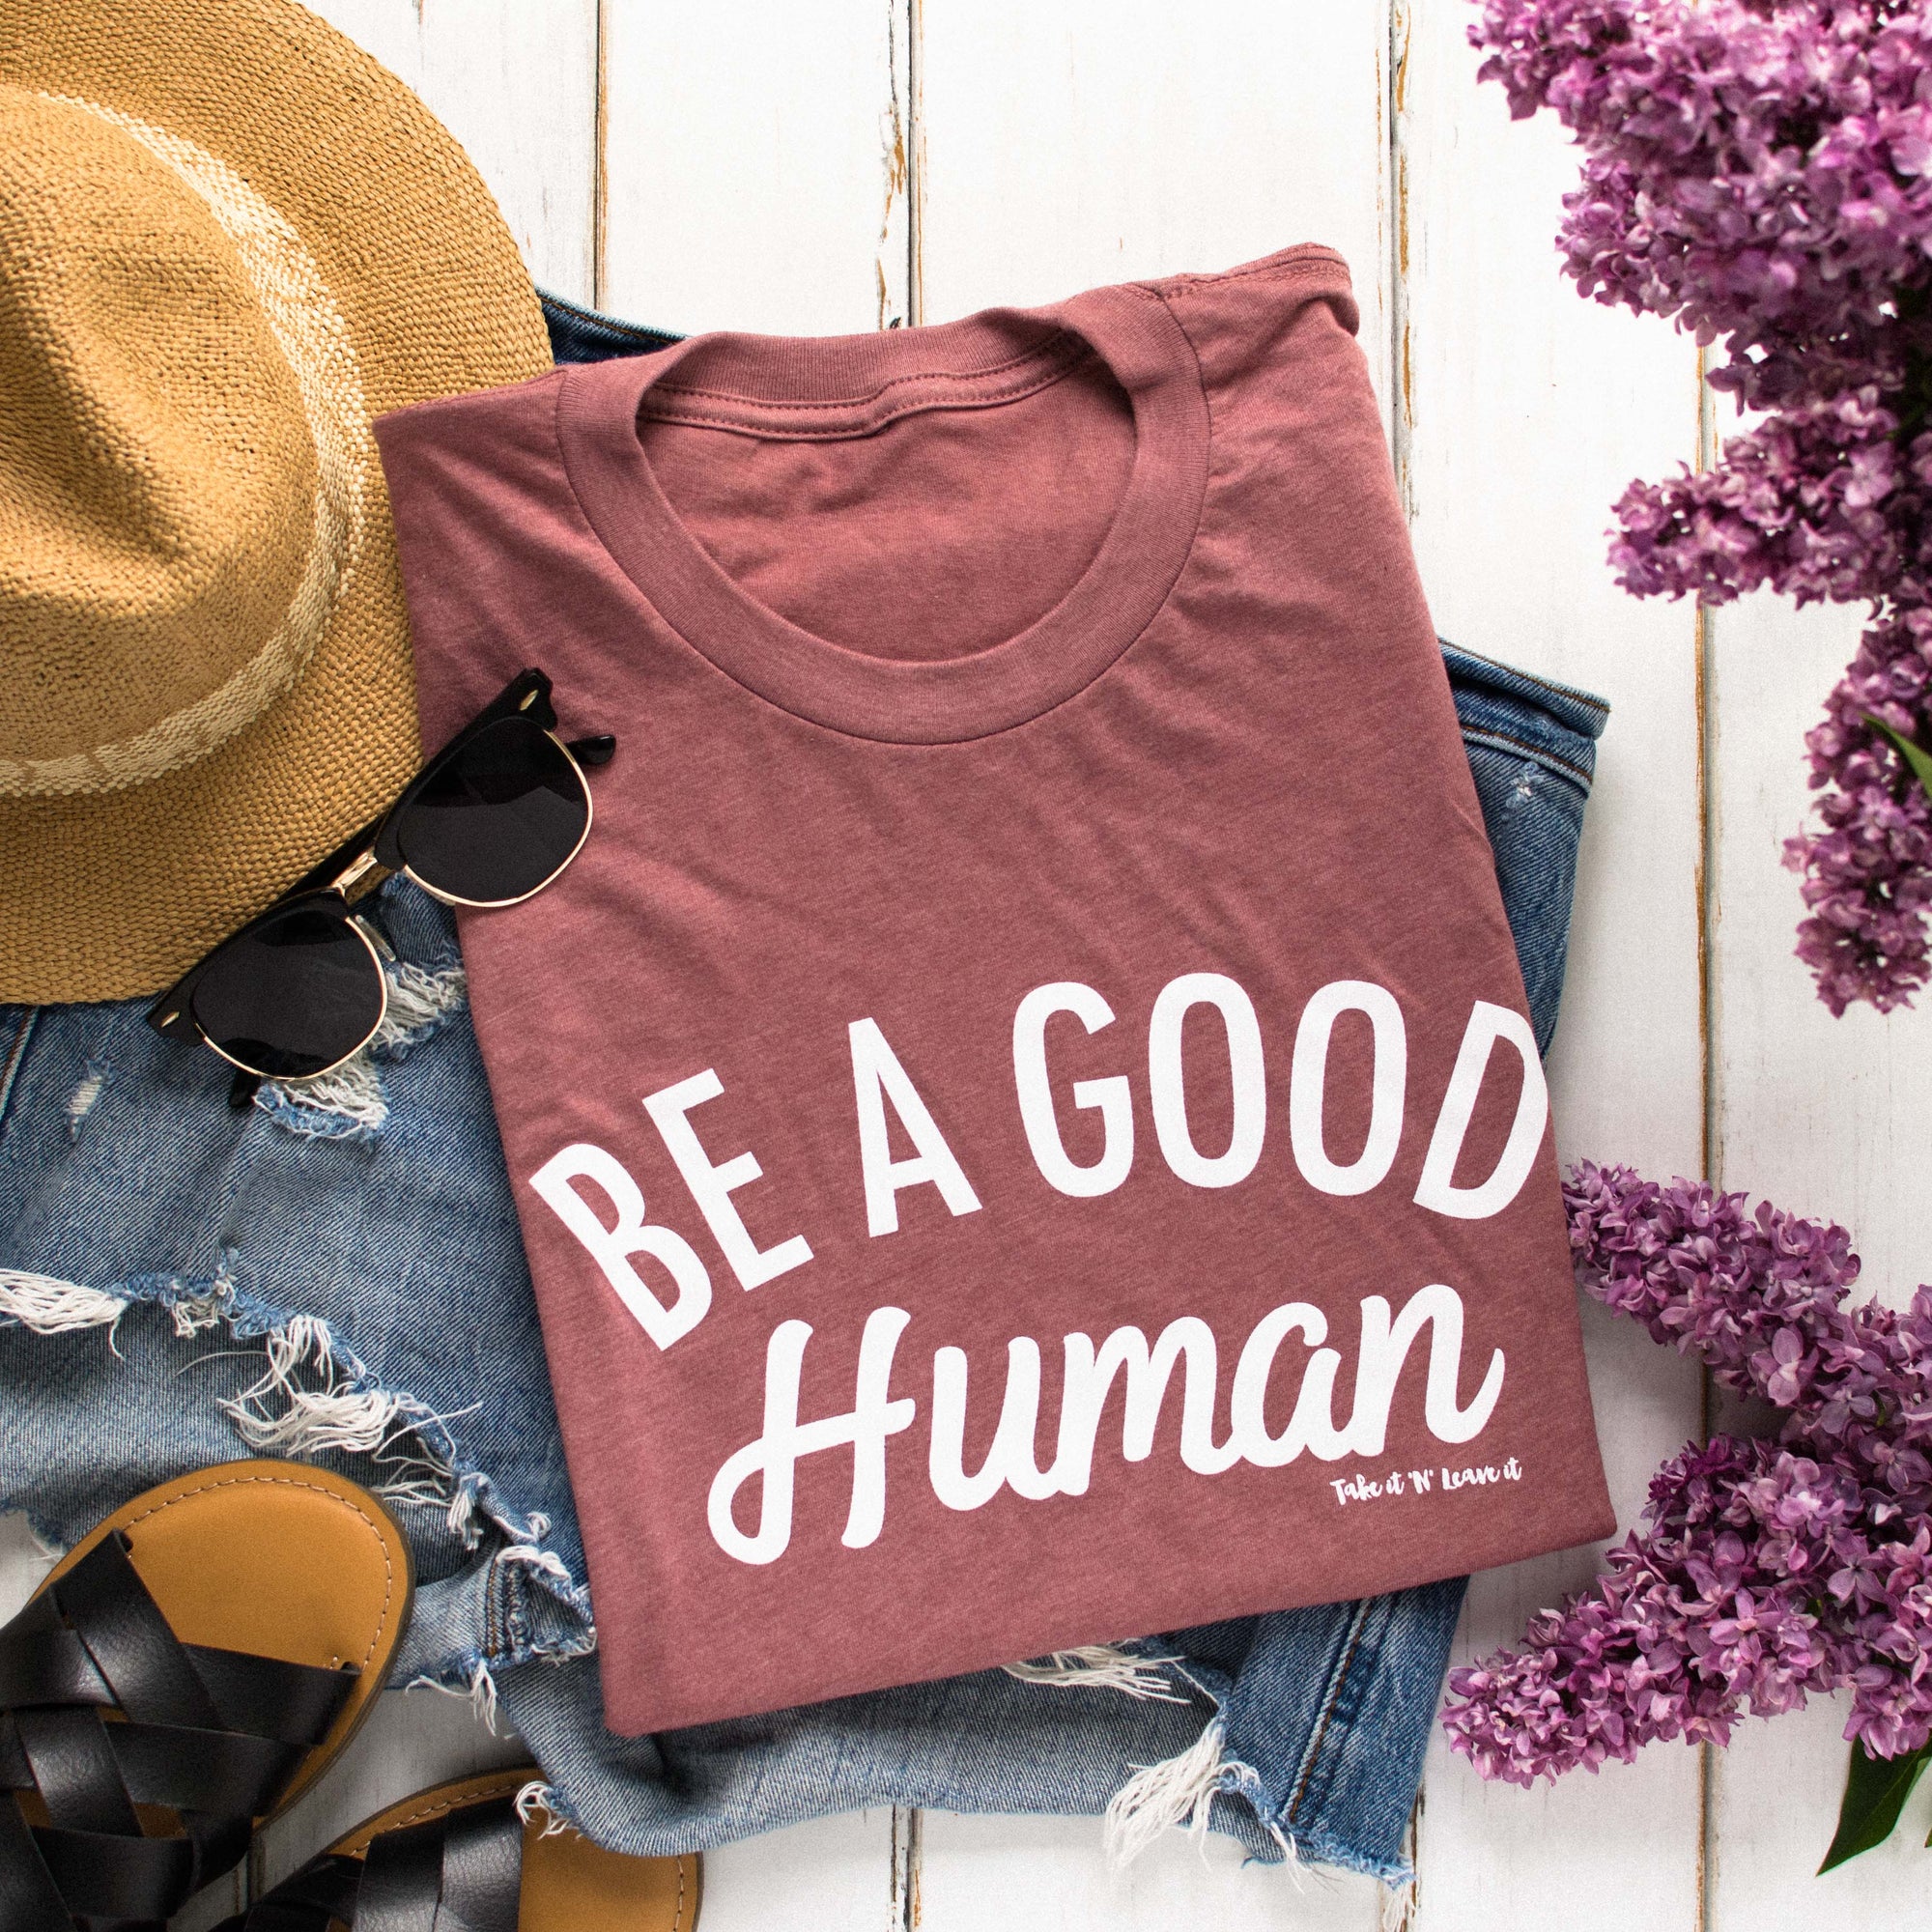 Be a Good Human